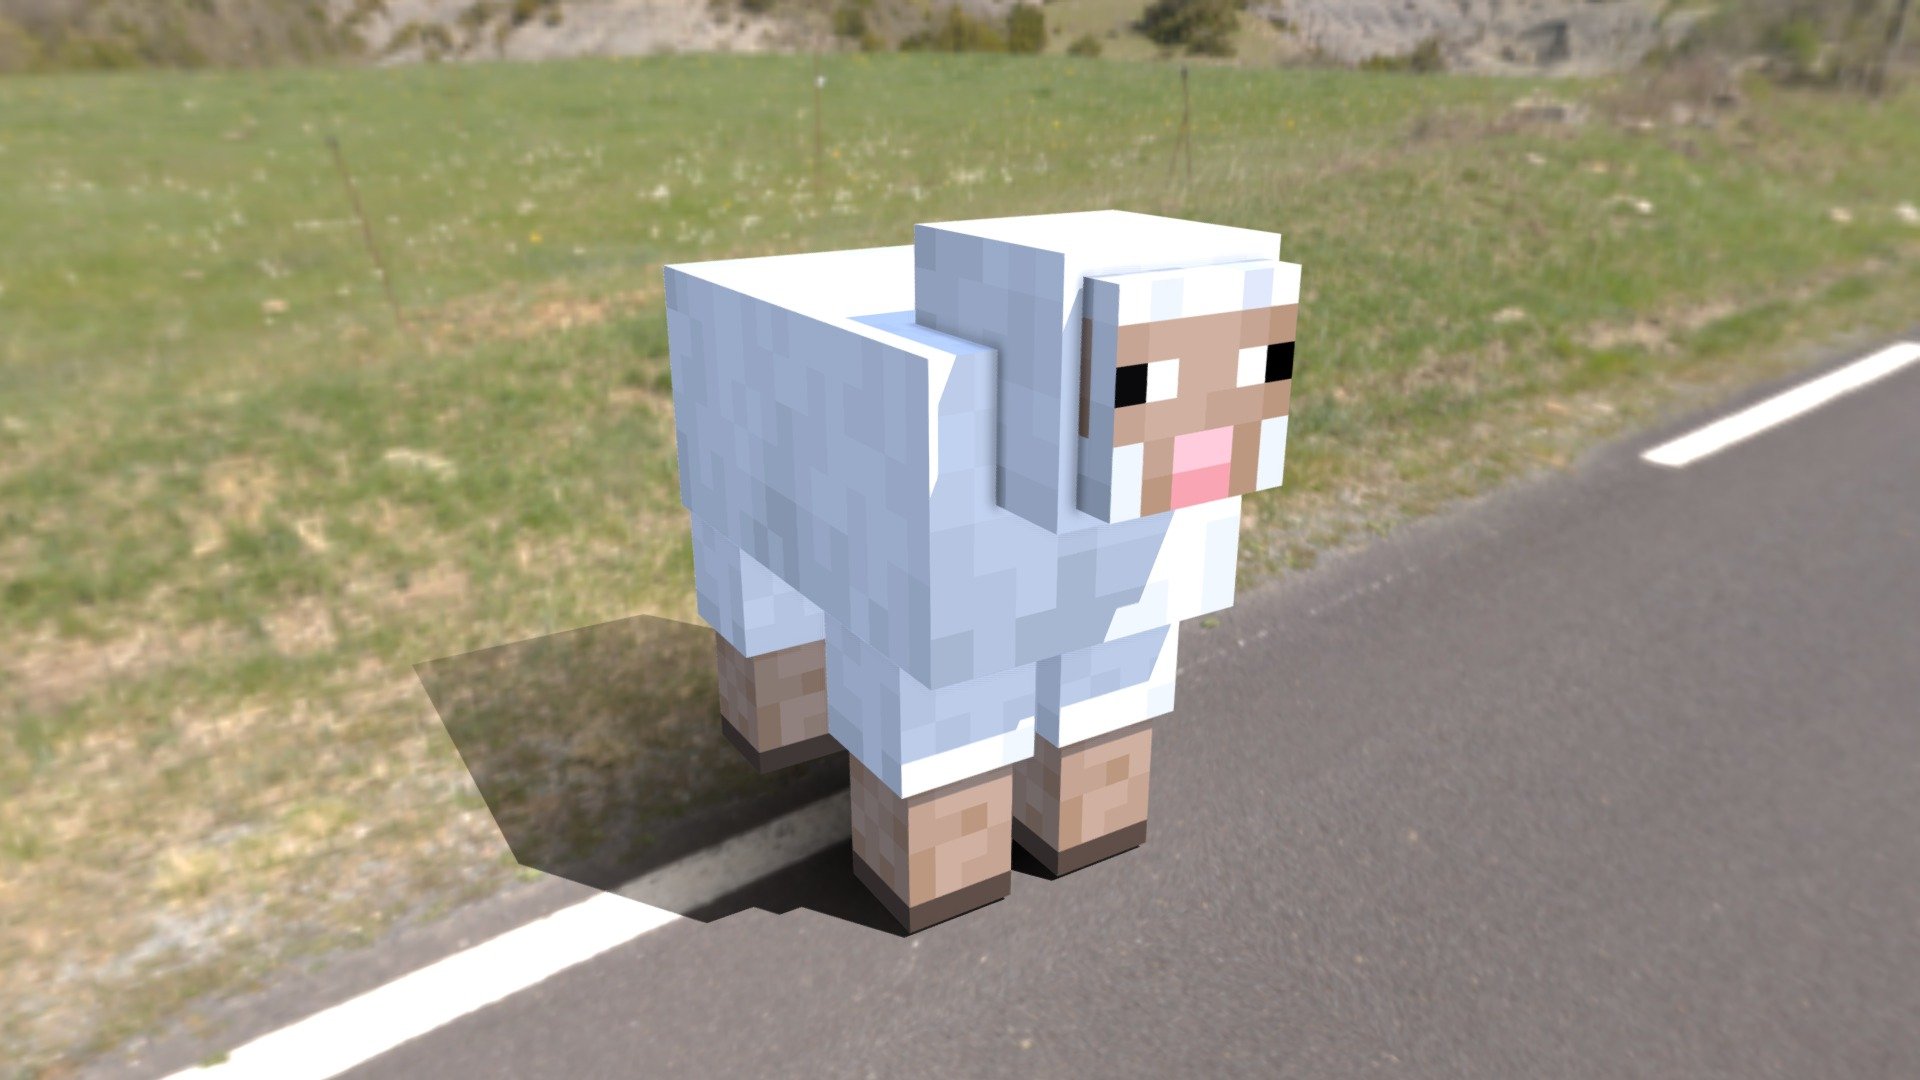 minecraft wallpaper sheep